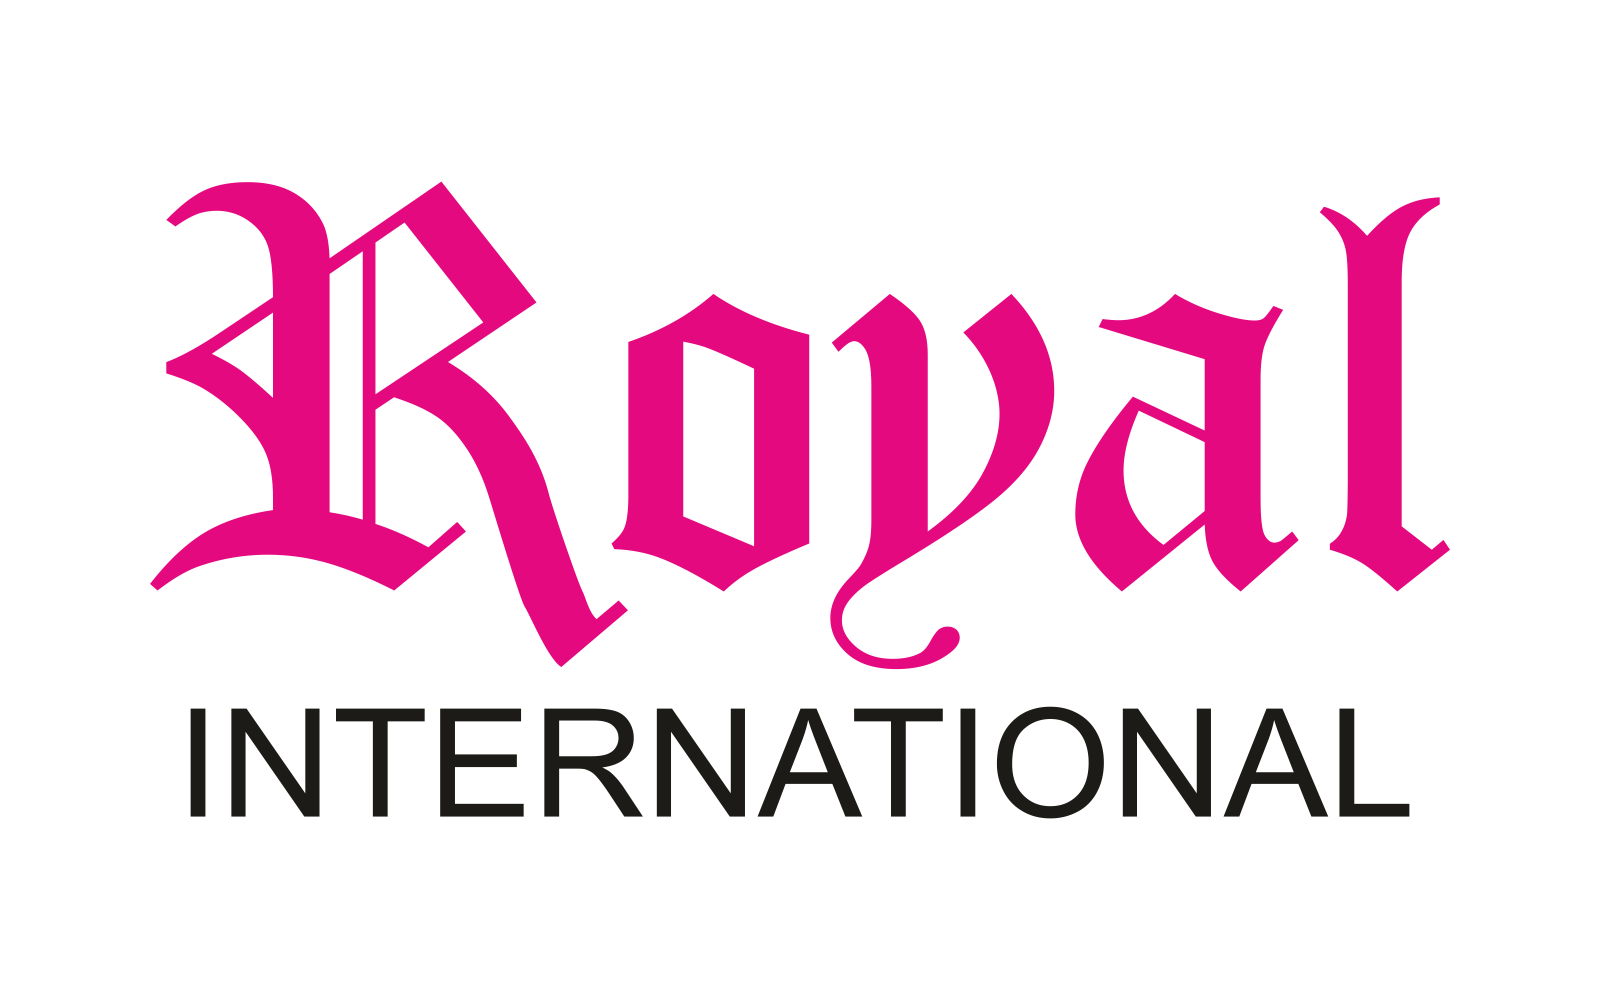 Our Brand Royal International